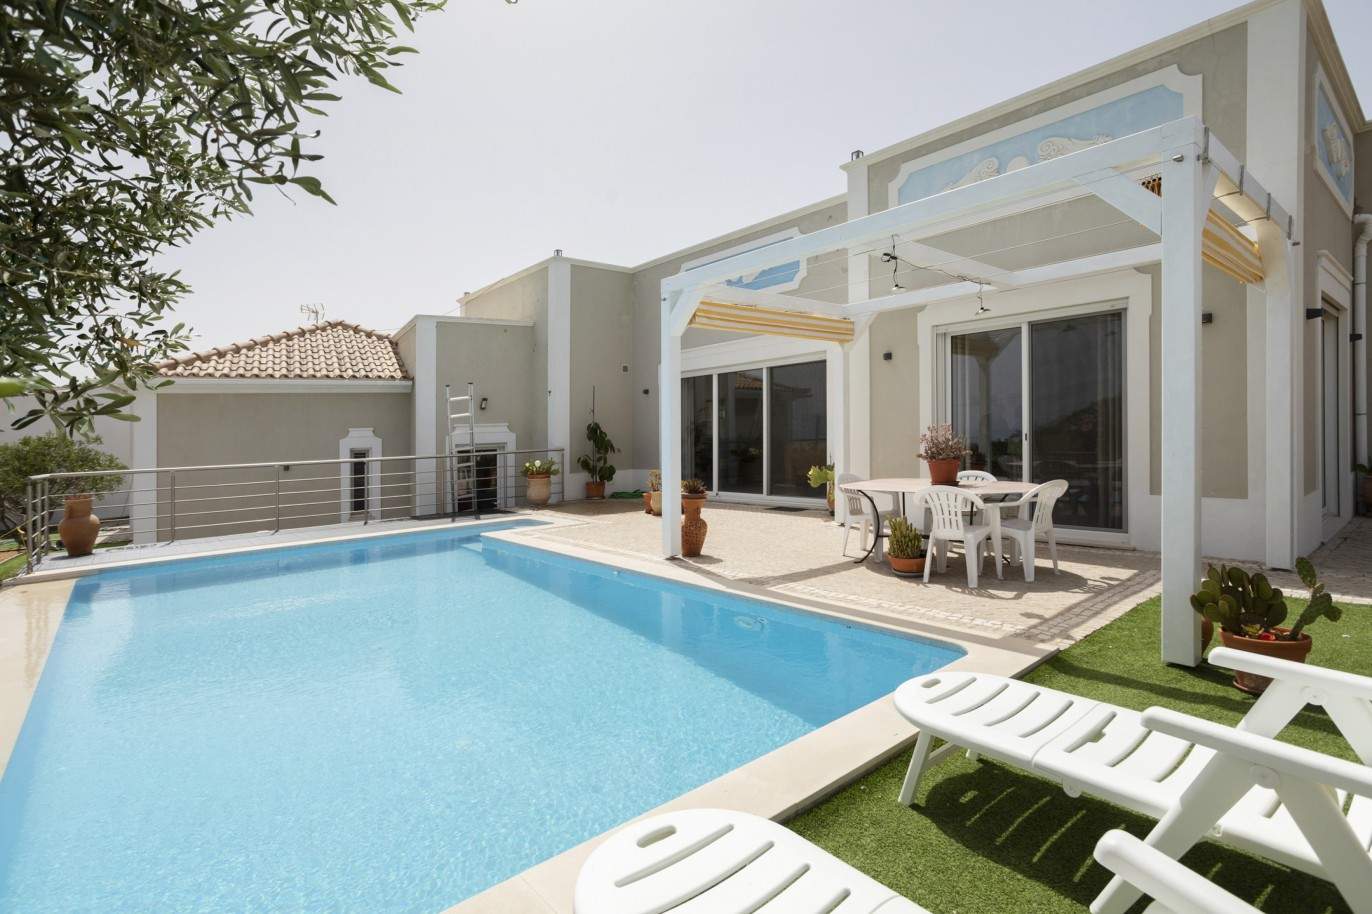 3 Bedroom Villa with swimming pool, for sale in Estoi, Algarve_201383